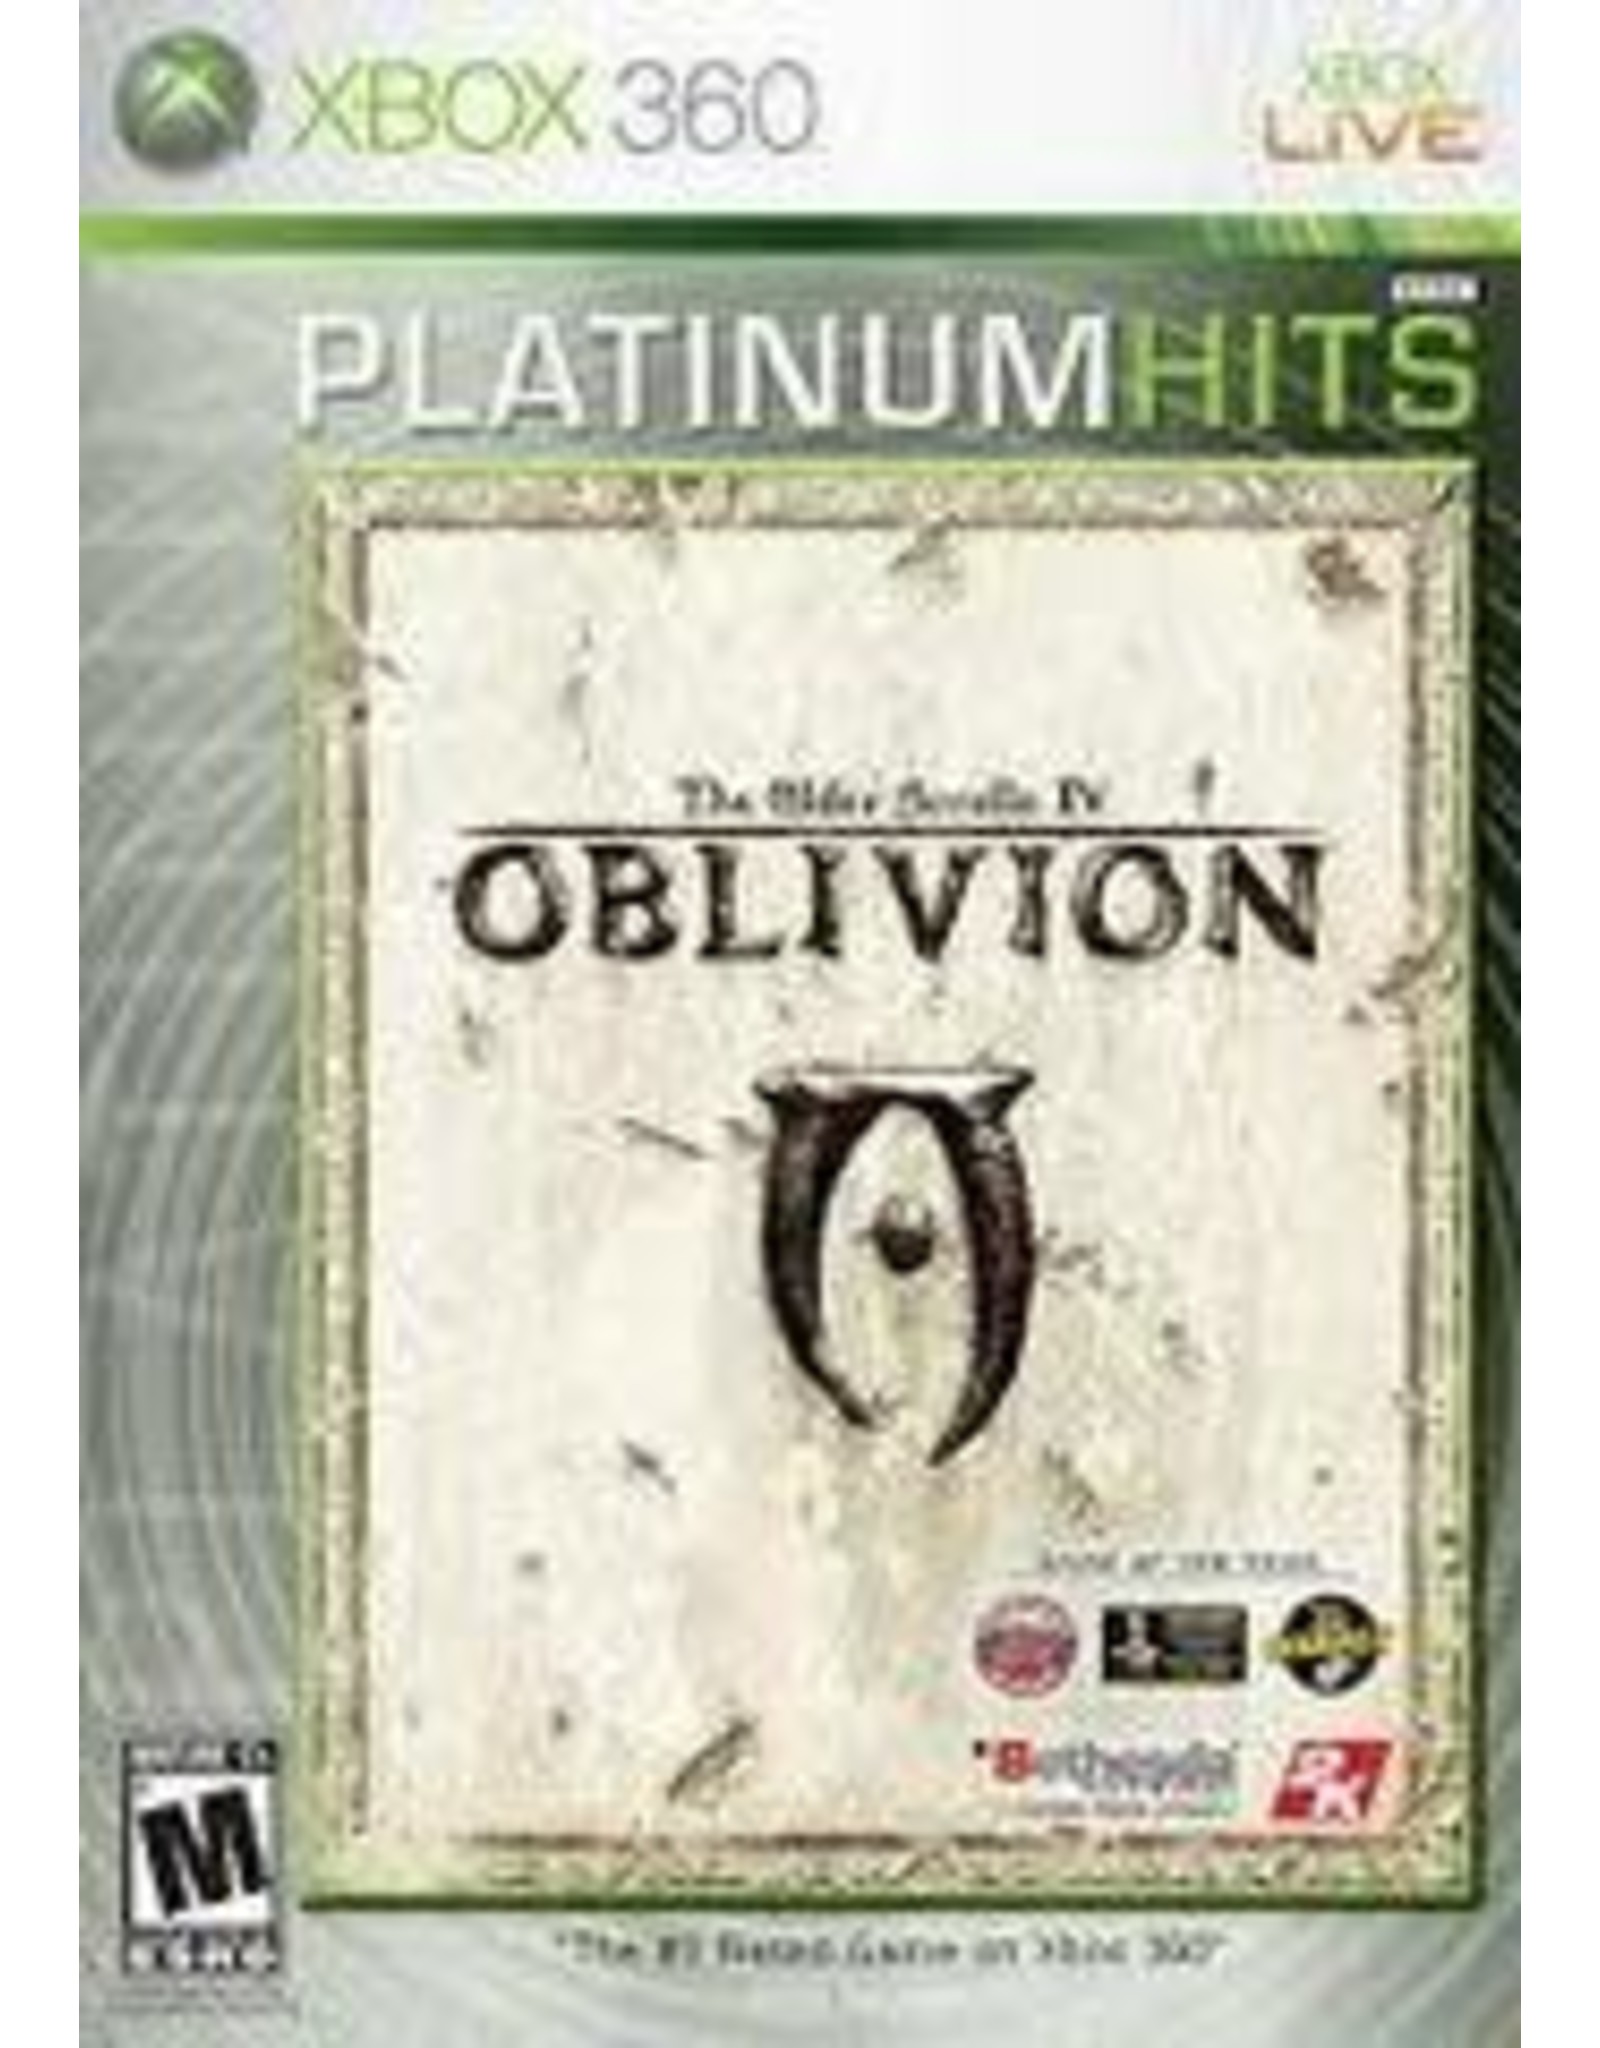 Xbox 360 Oblivion, Elder Scrolls IV (Platinum Hits, CiB)